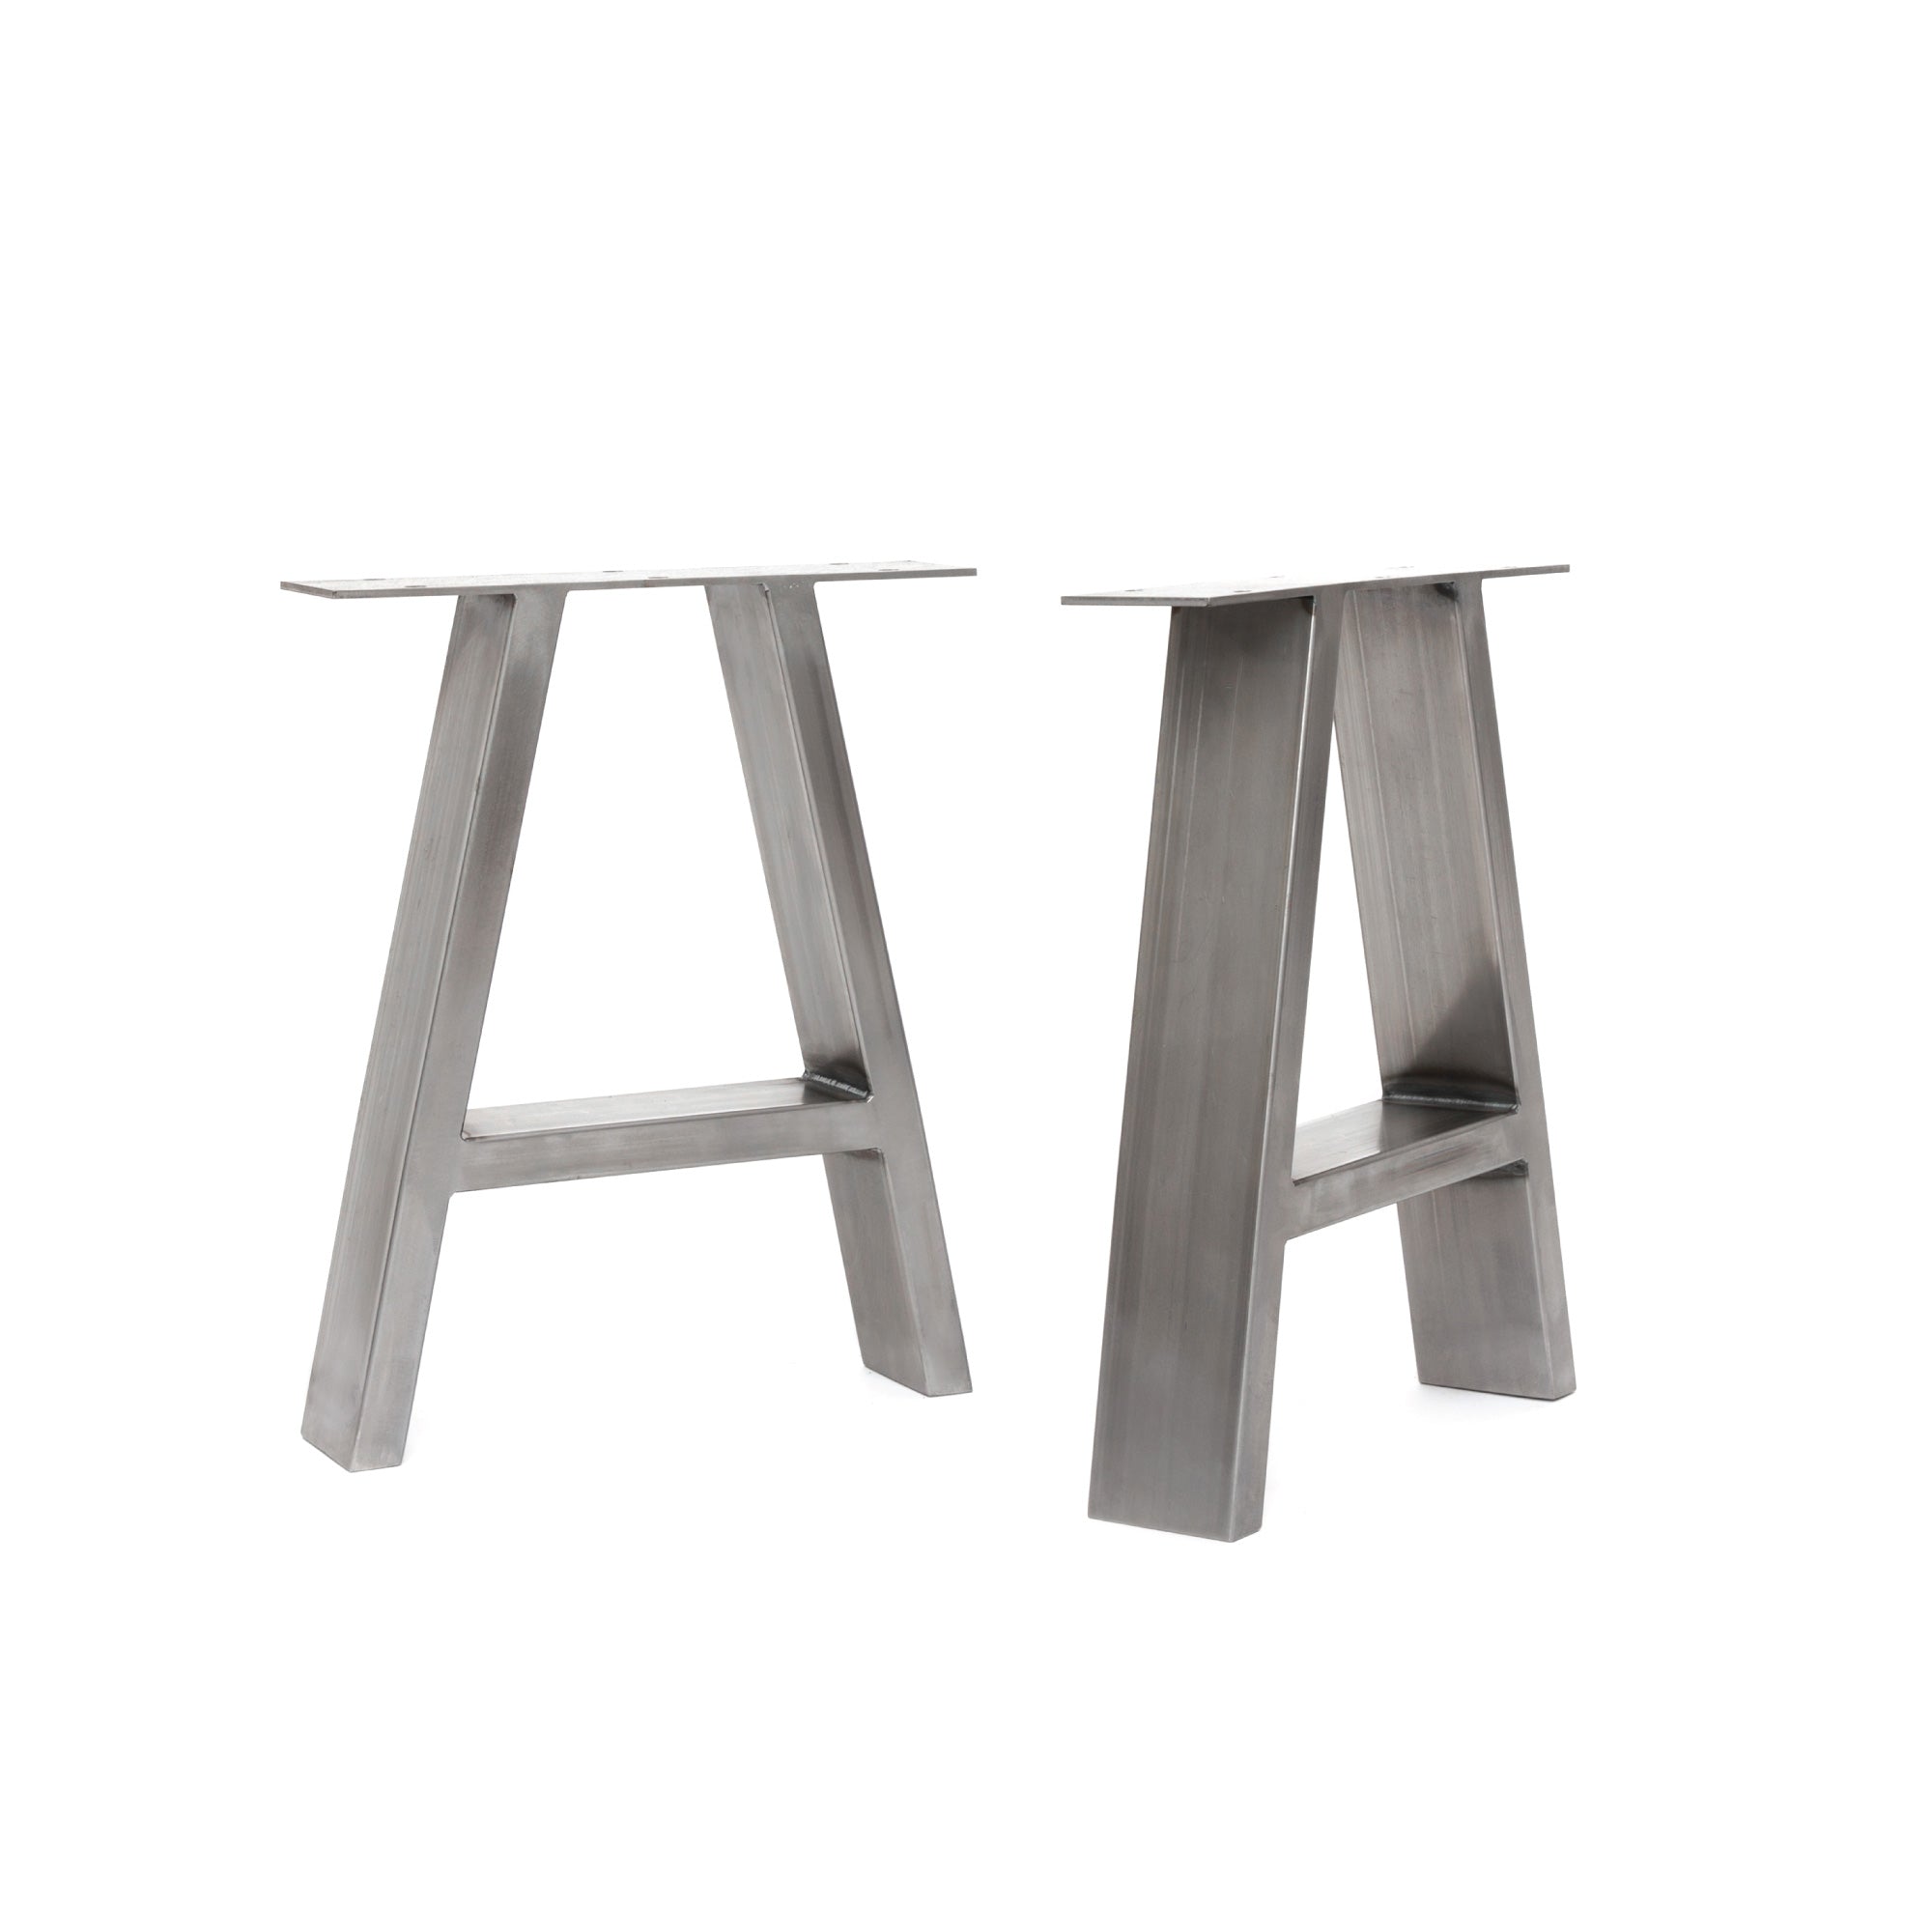 A-Frame Industrial legs | 40cm Bench